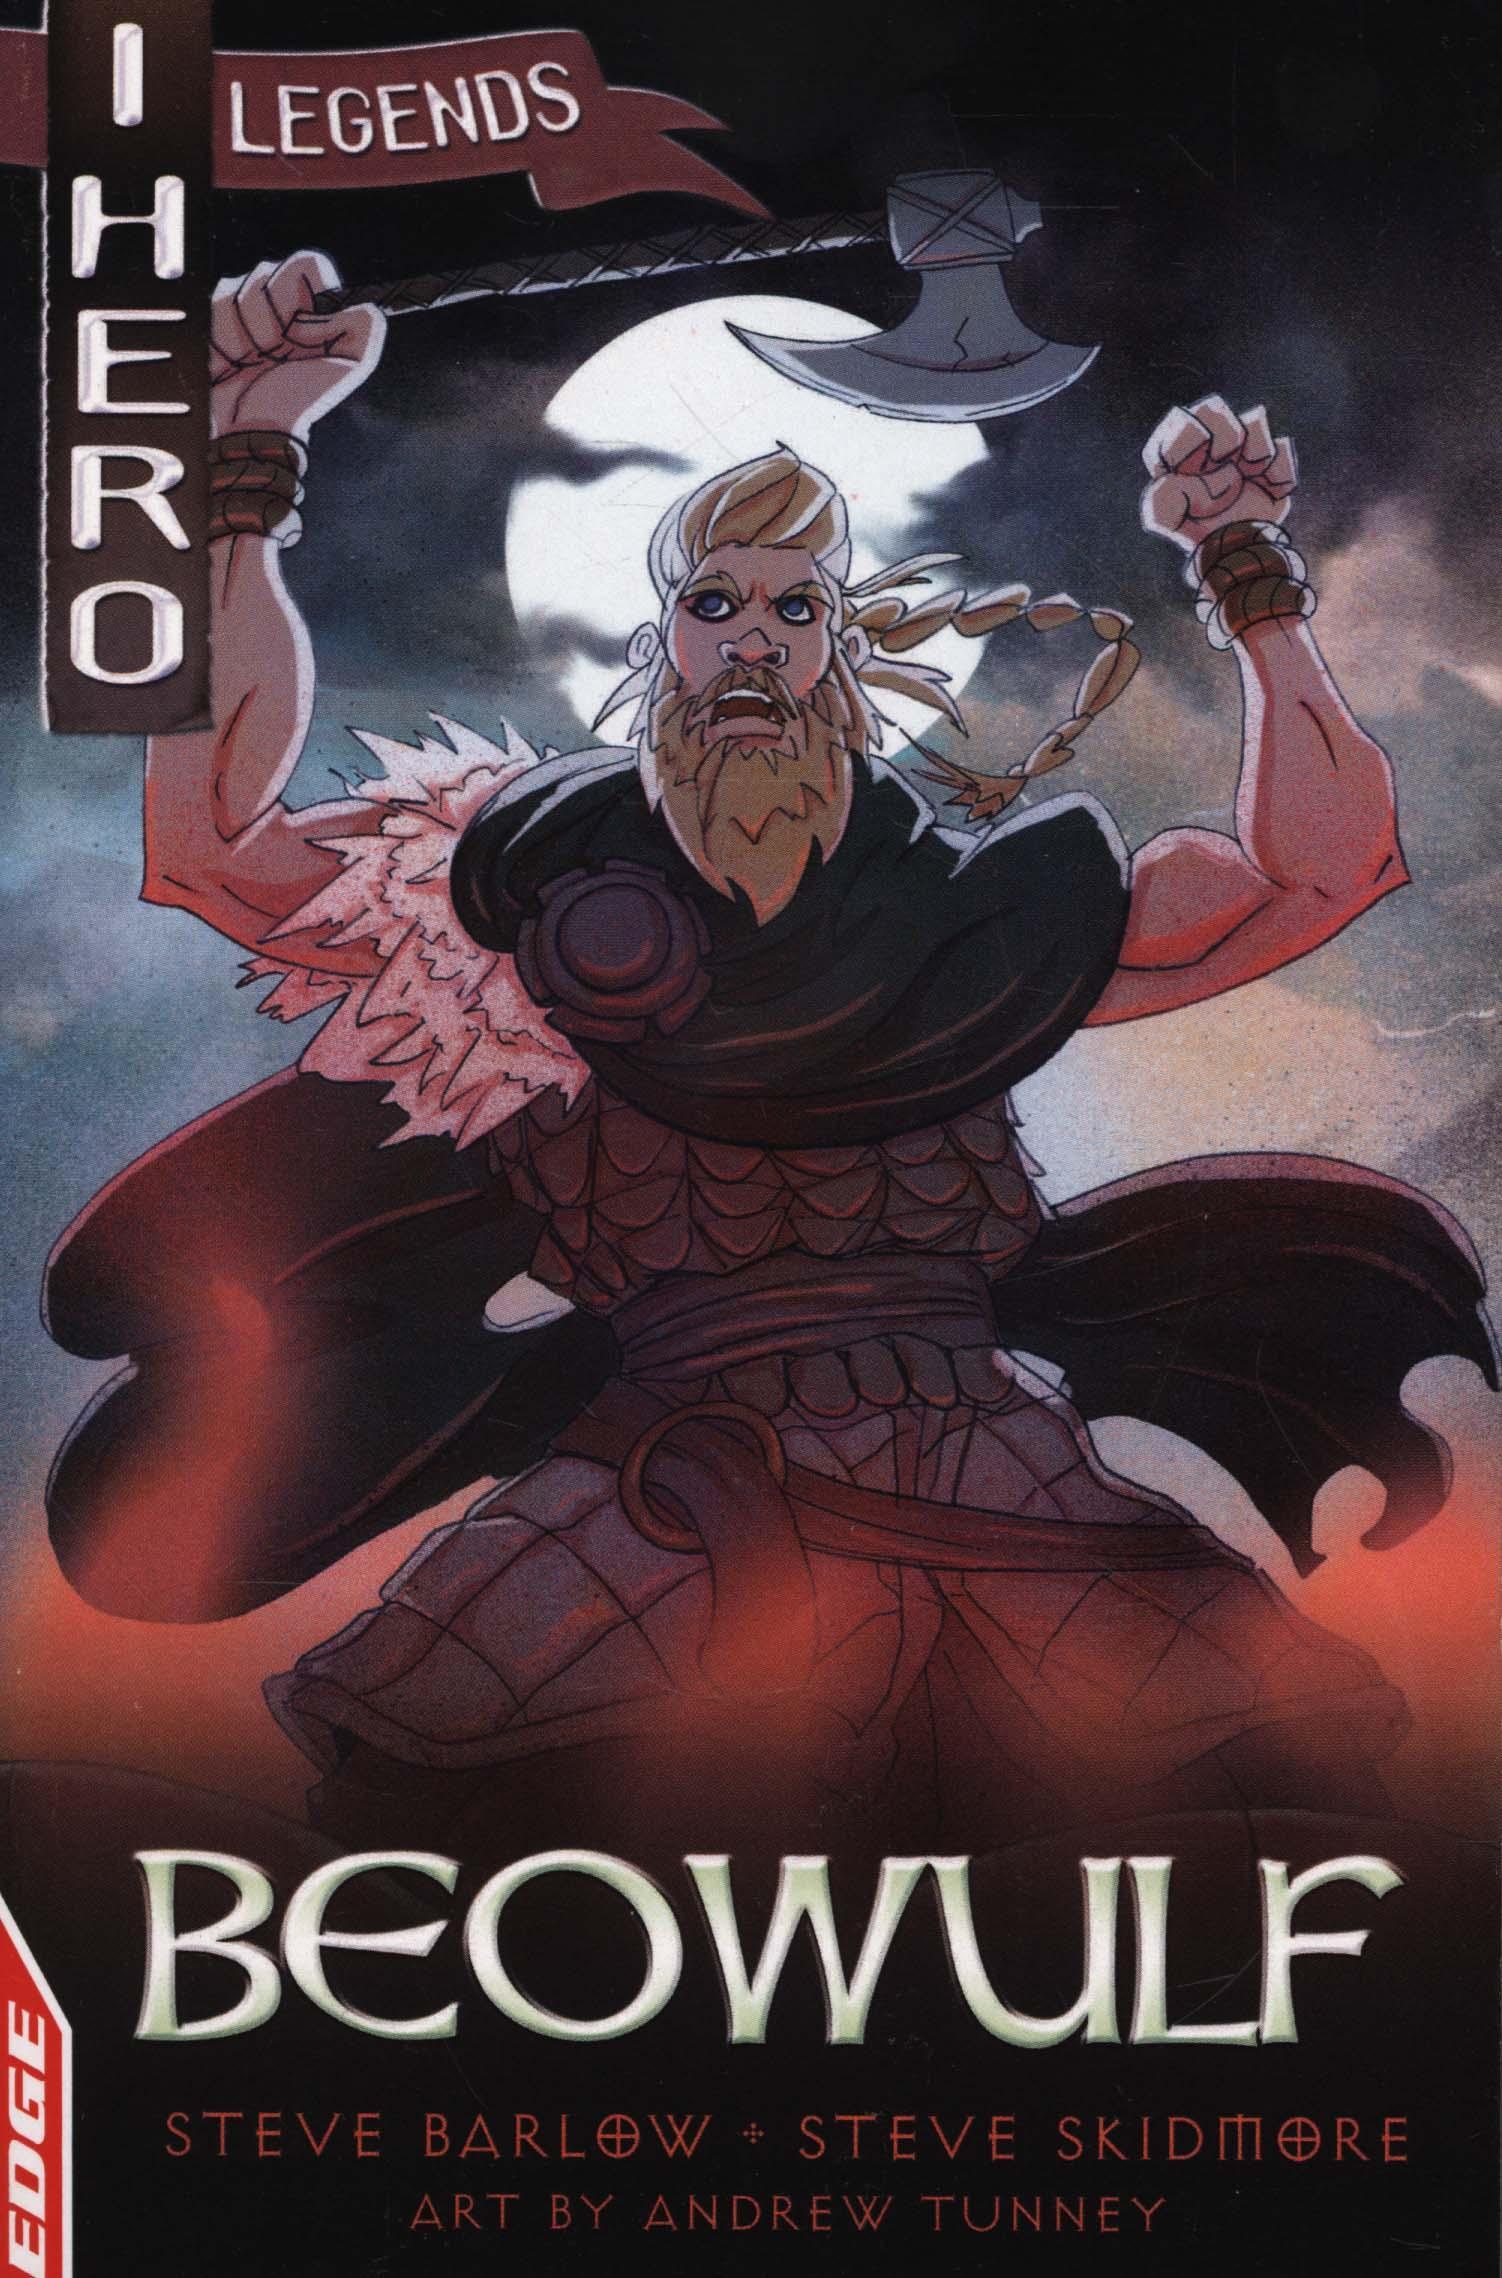 EDGE: I HERO: Legends: Beowulf - Steve Barlow